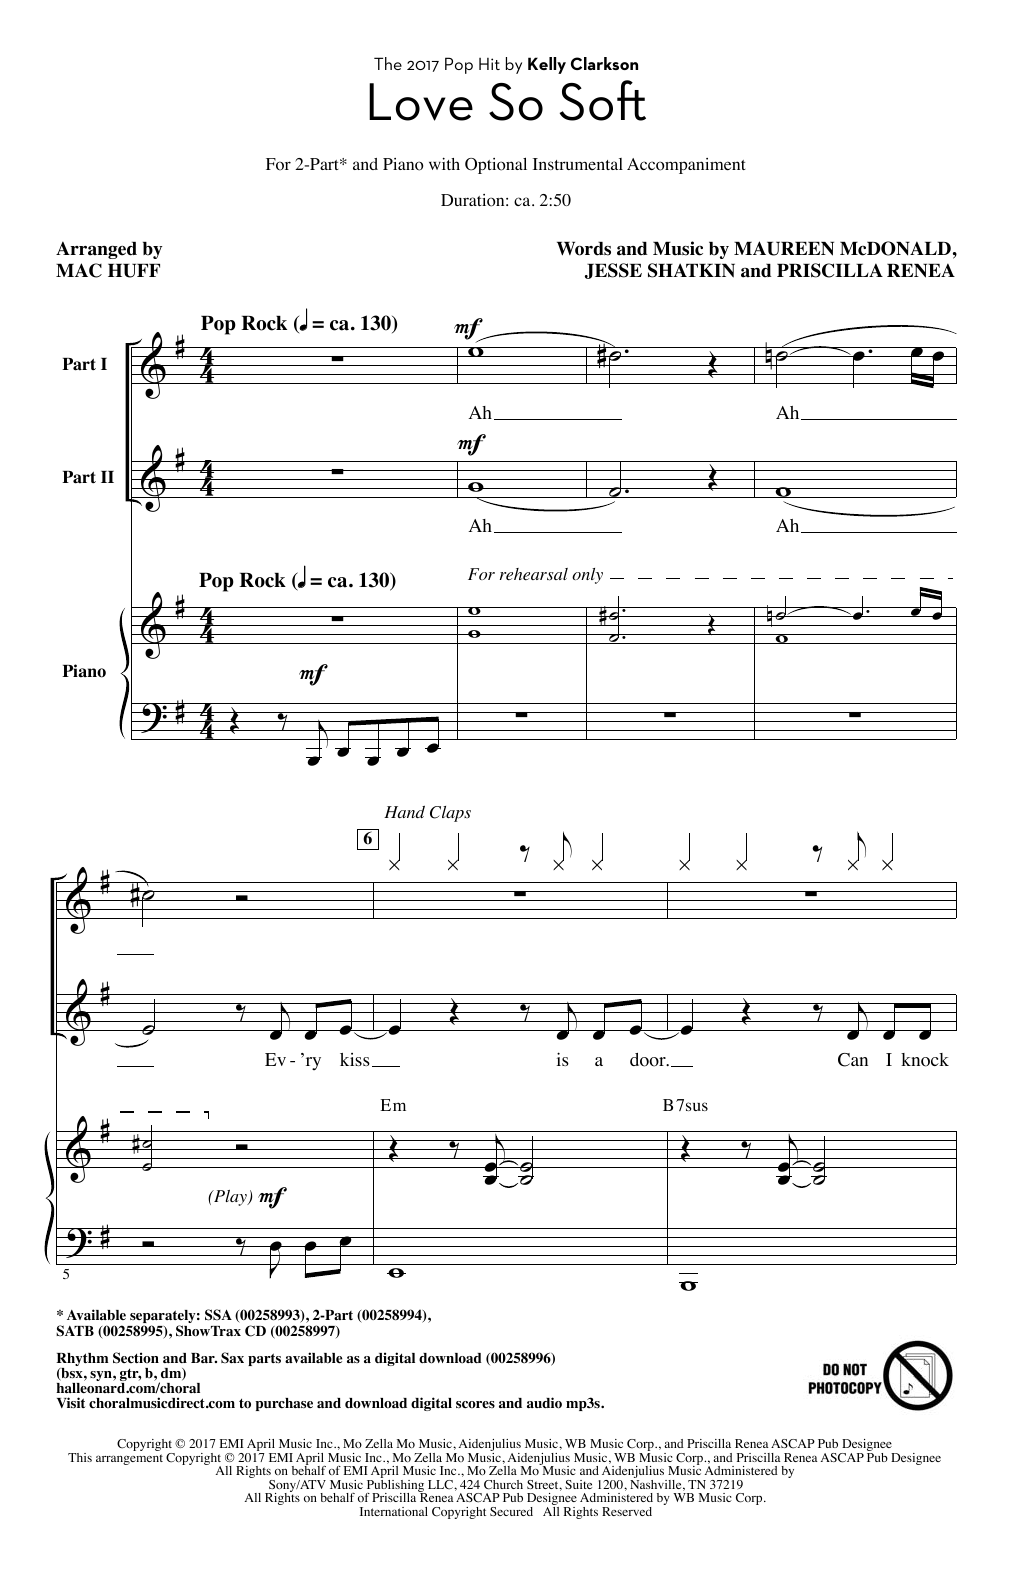 Mac Huff Love So Soft sheet music notes and chords arranged for SATB Choir